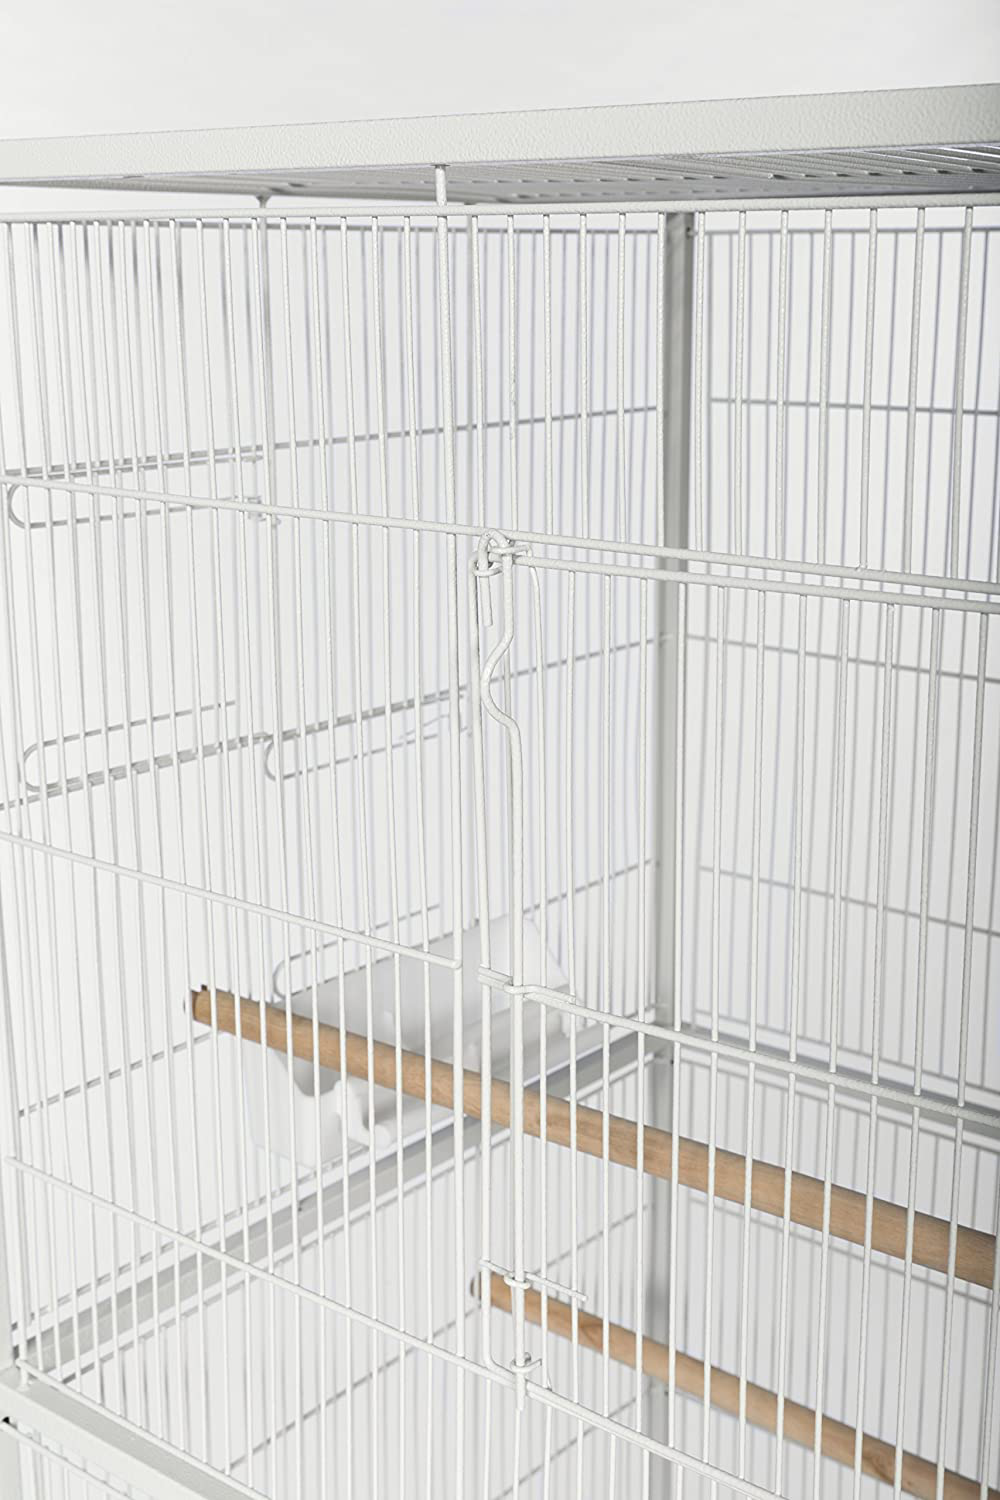 Prevue Hendryx Pet Products Wrought Iron Flight Cage Animals & Pet Supplies > Pet Supplies > Bird Supplies > Bird Cages & Stands Prevue Pet Products   